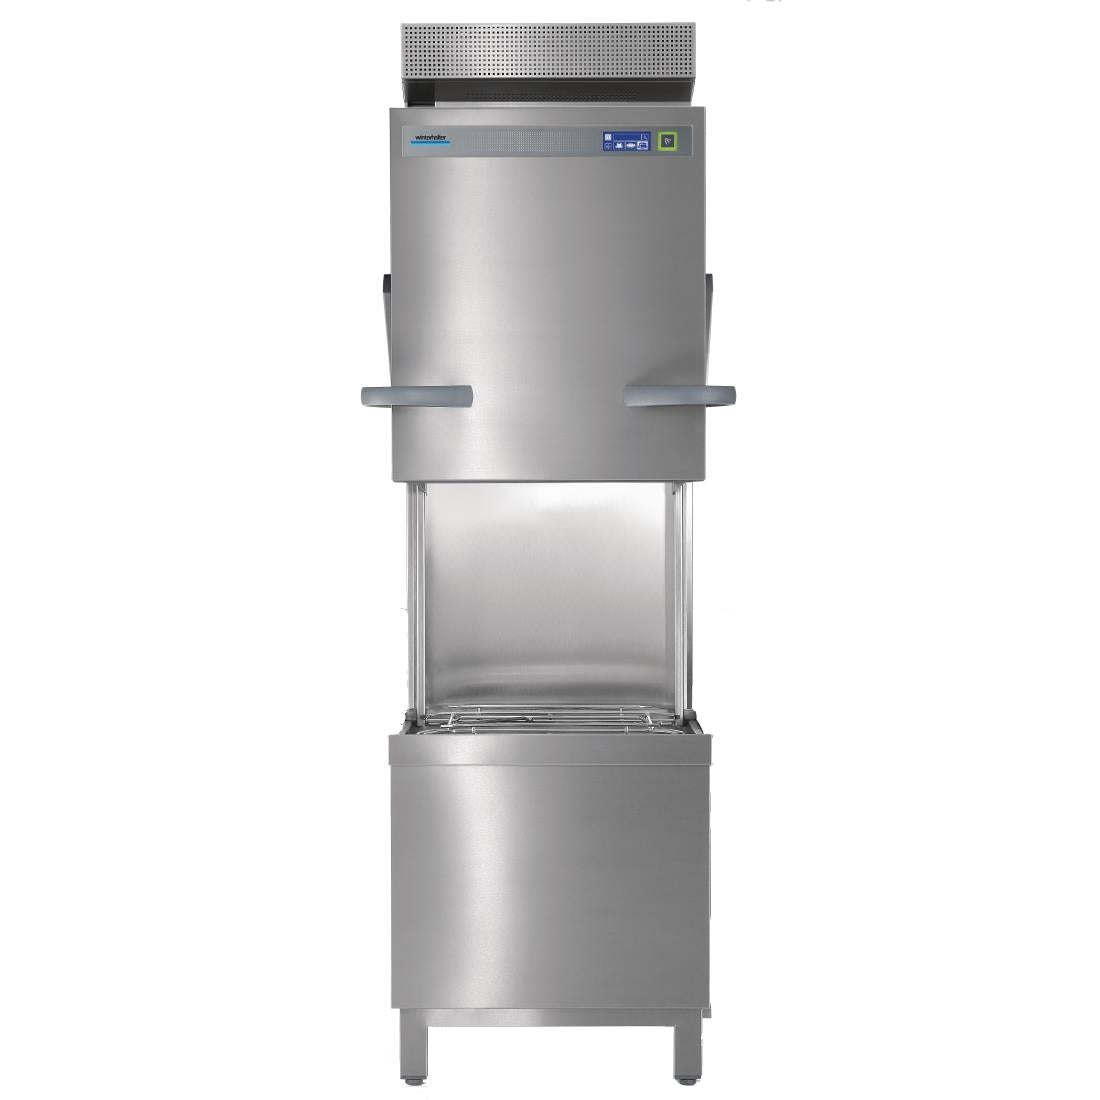 Winterhalter Pass Through Dishwasher PT-XL-E-1 Energy with Install